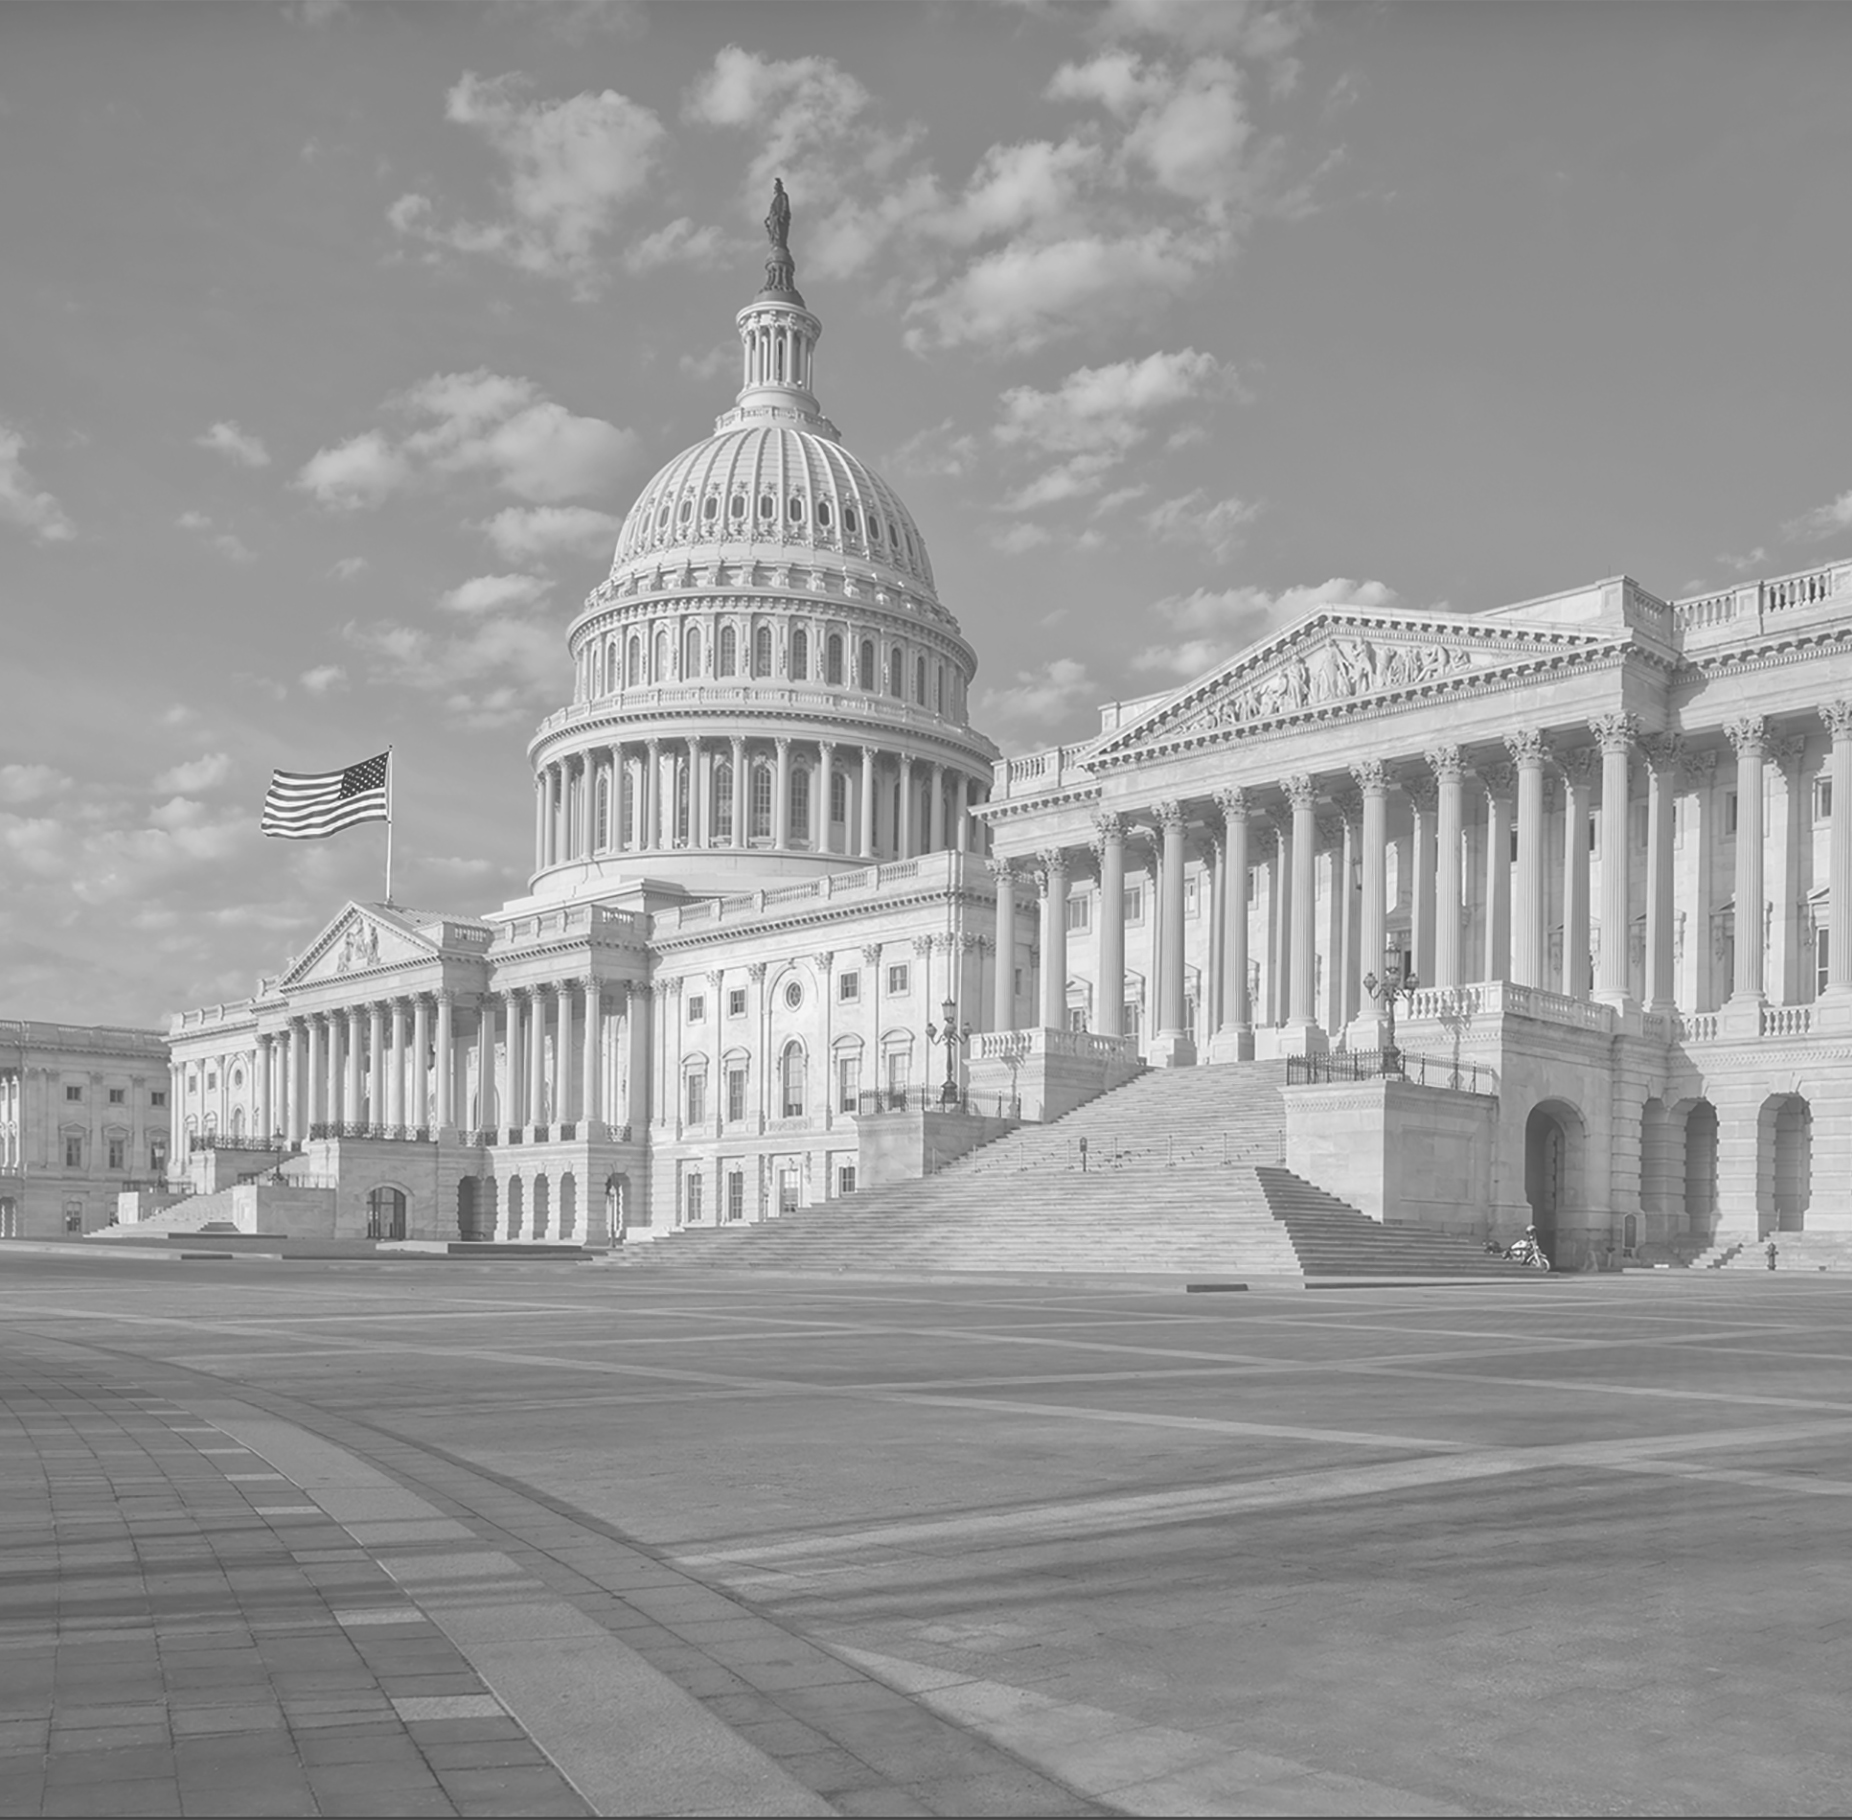 Background image: U.S. House of Representatives building